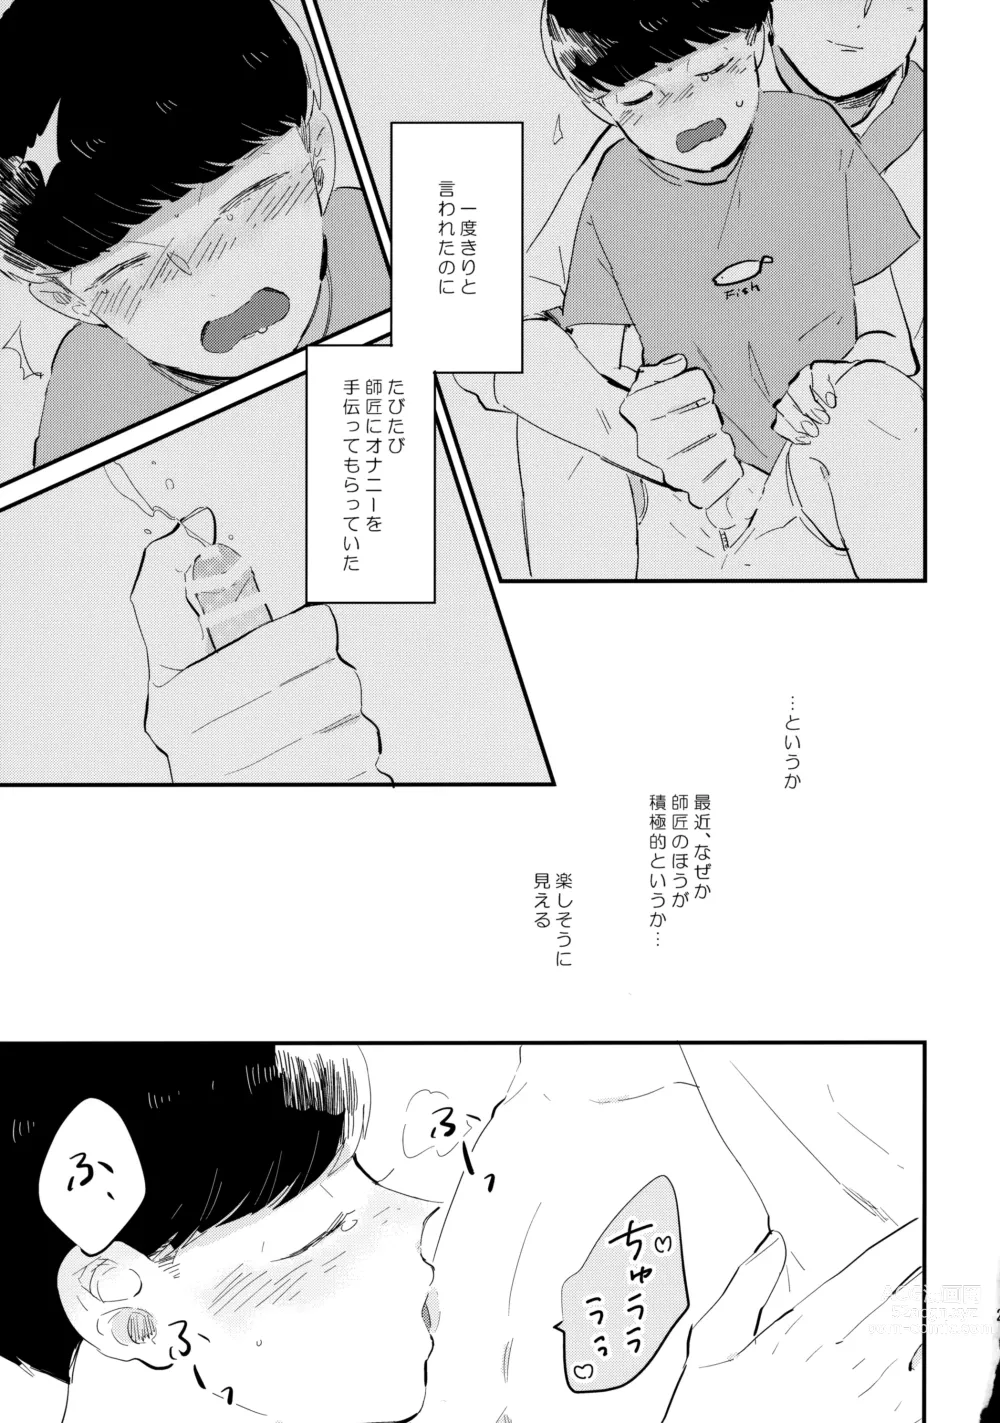 Page 22 of doujinshi Milky Boy, Oshiete Ageru.